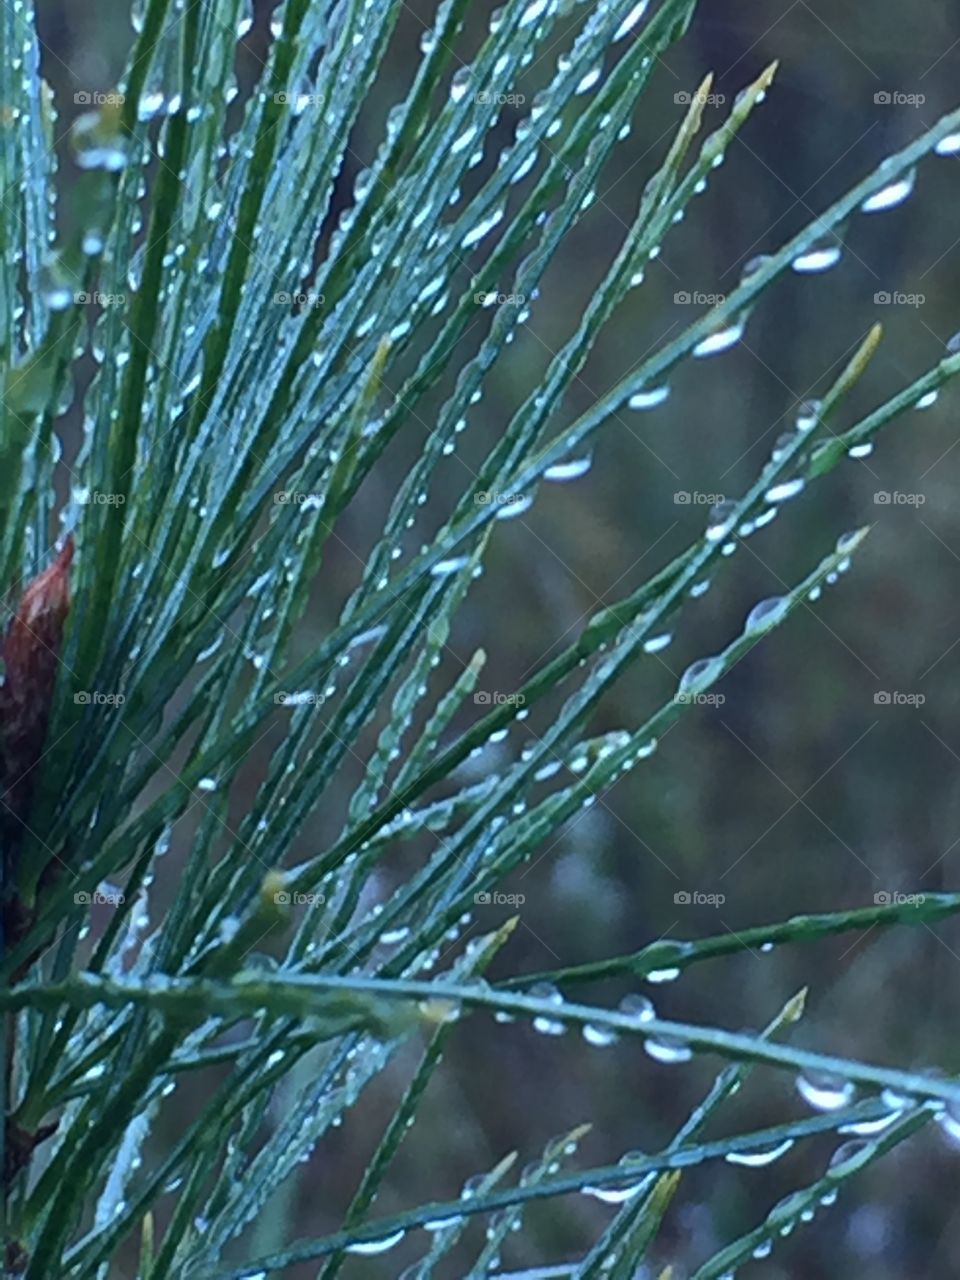 Dew Drops on Pine